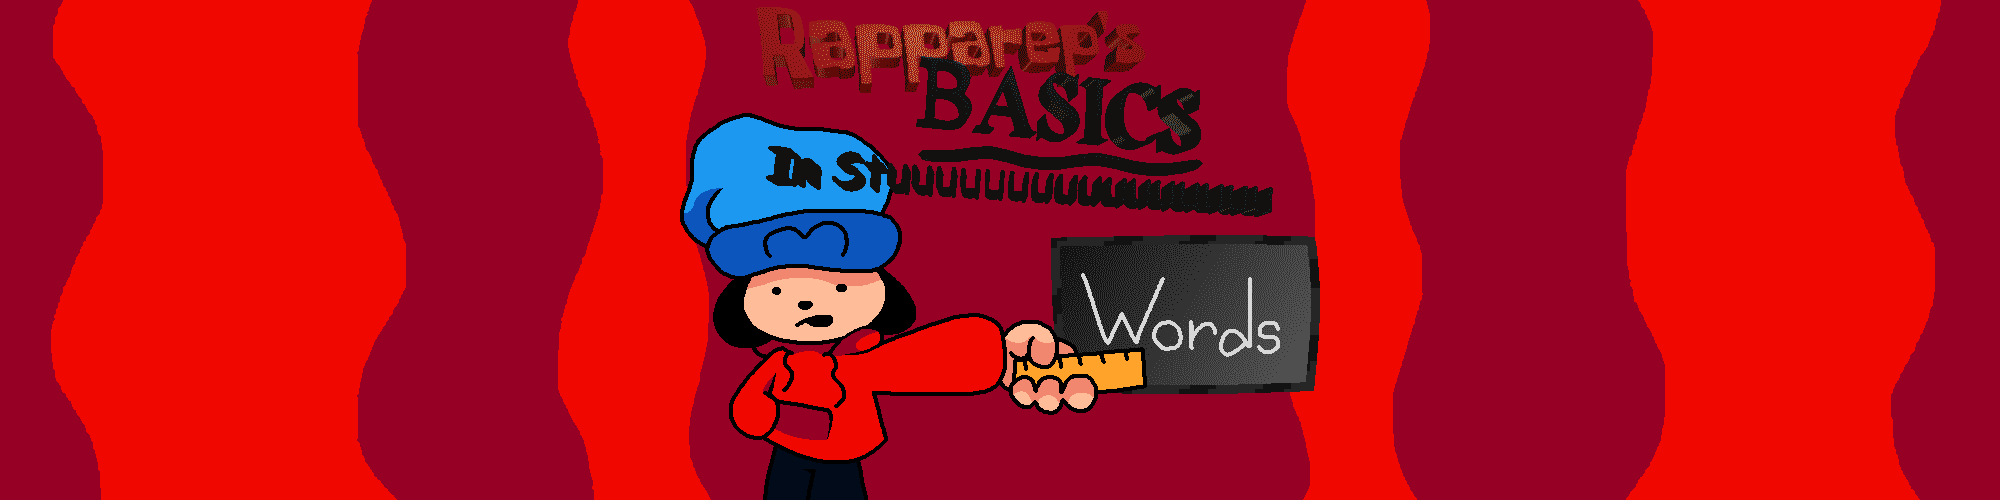 Rapparep's Basics in Stuff